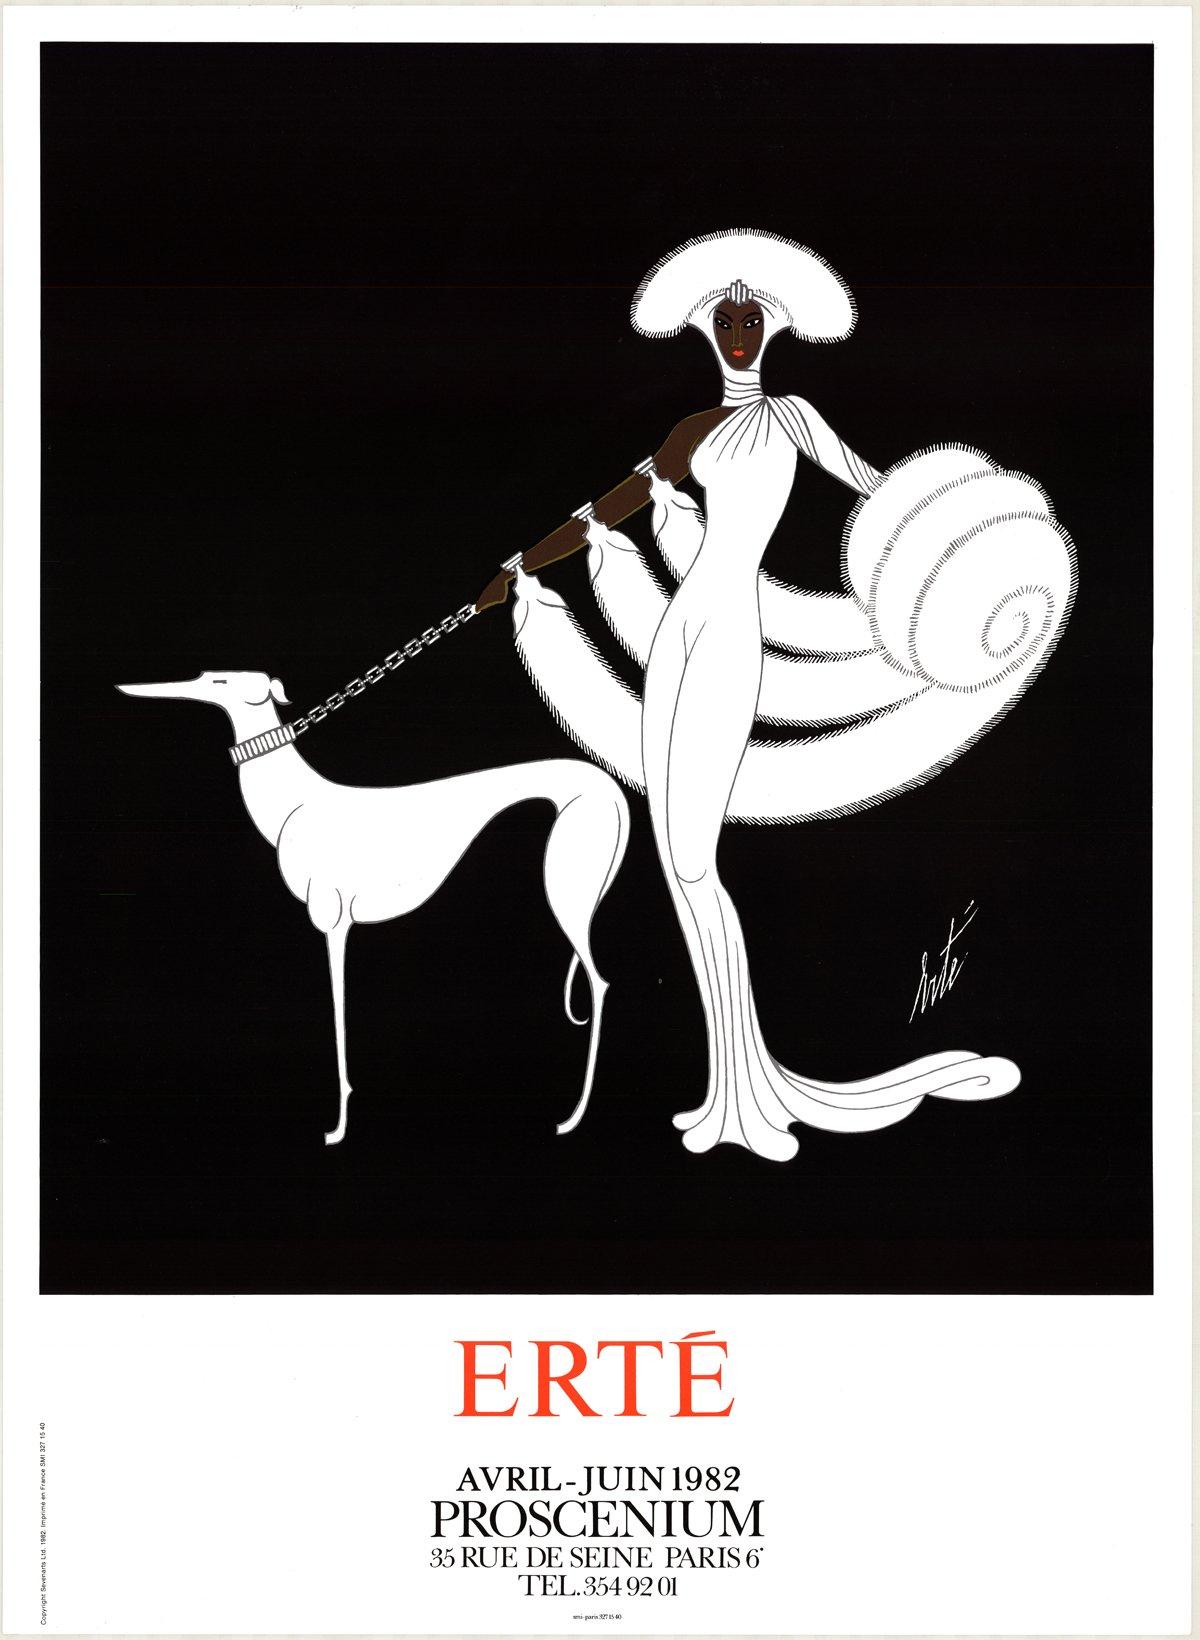 1982 After Erte 'Symphony in White (Proscenium)' Art Deco Black & White France - Print by Erté